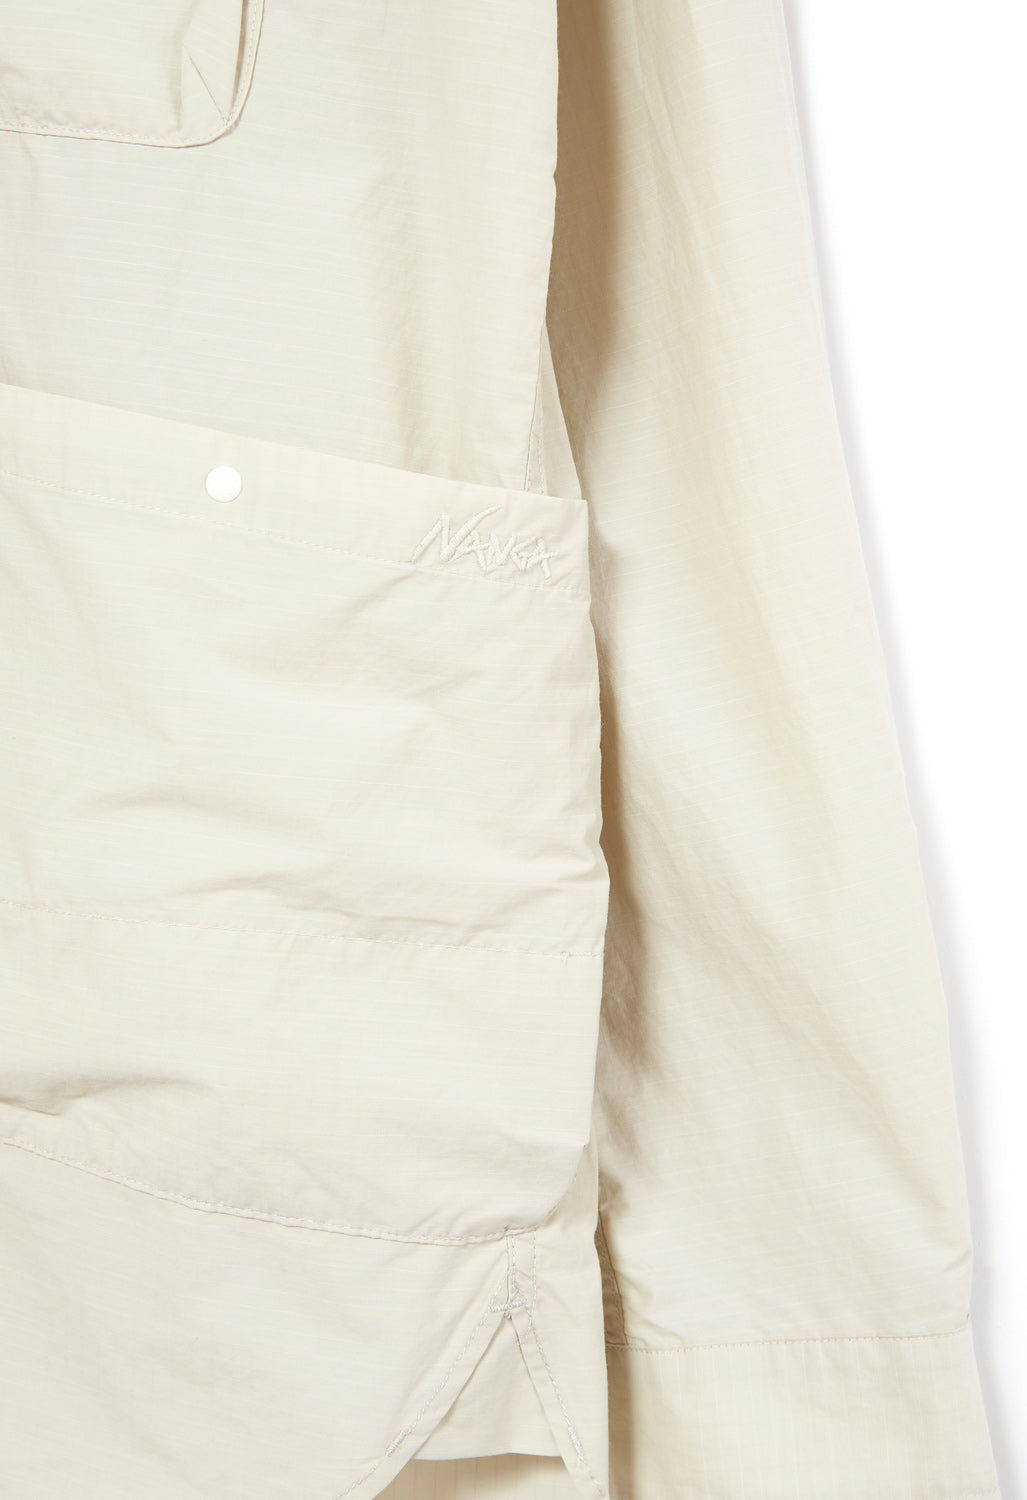 Nanga Men's Cotton / Nylon Ripstop Camp Shirt - Light Beige